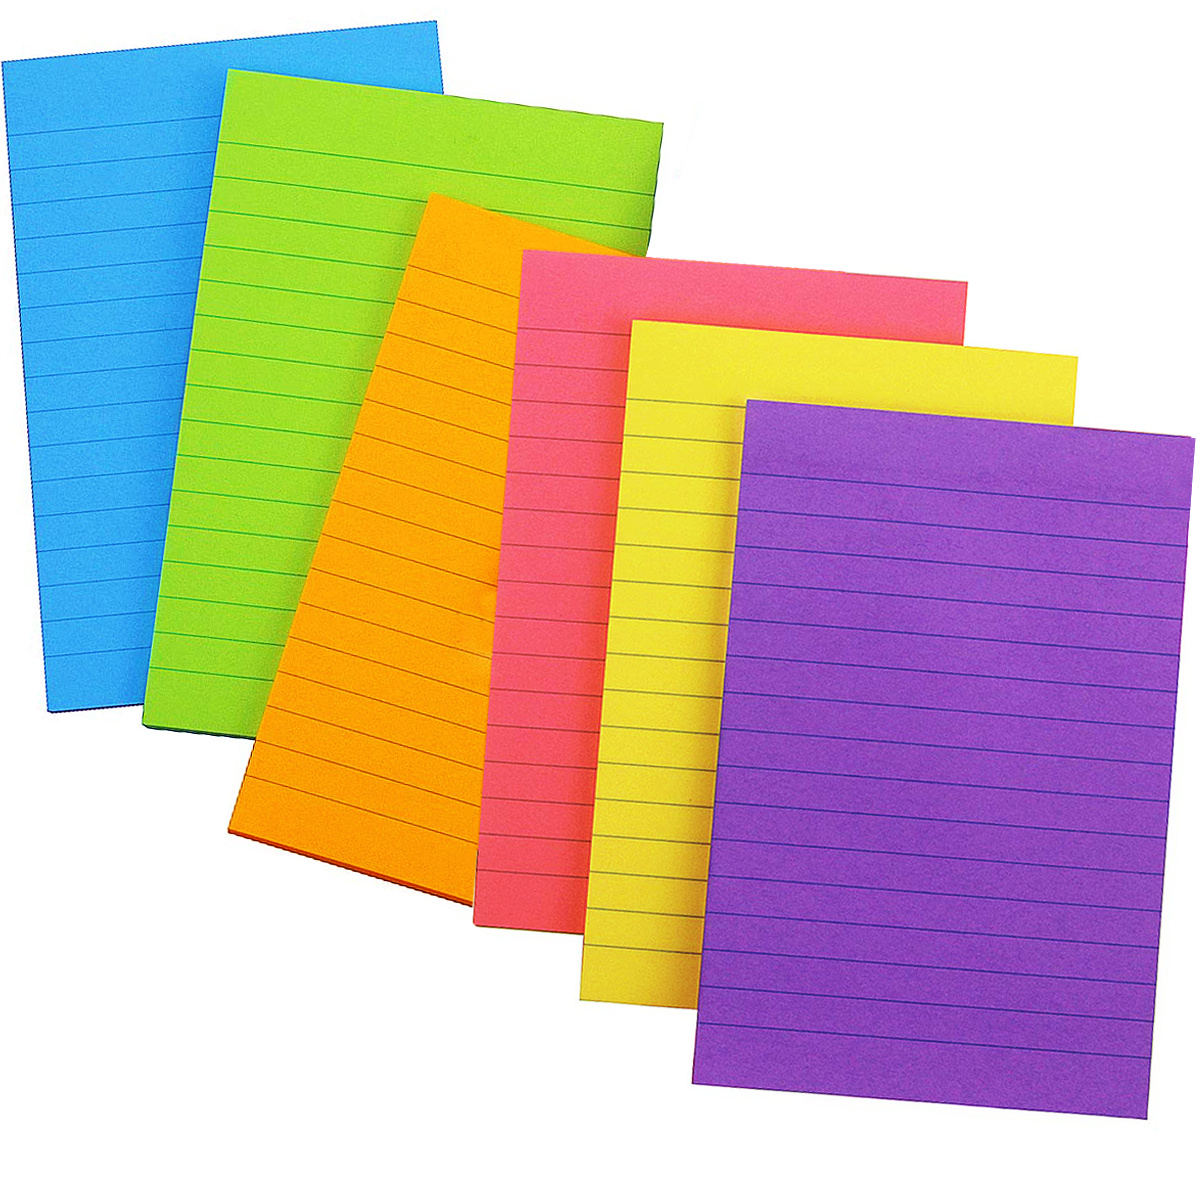 Post-it Big Notes, 15 x 15, Neon Orange, 30 Sheets (BN15